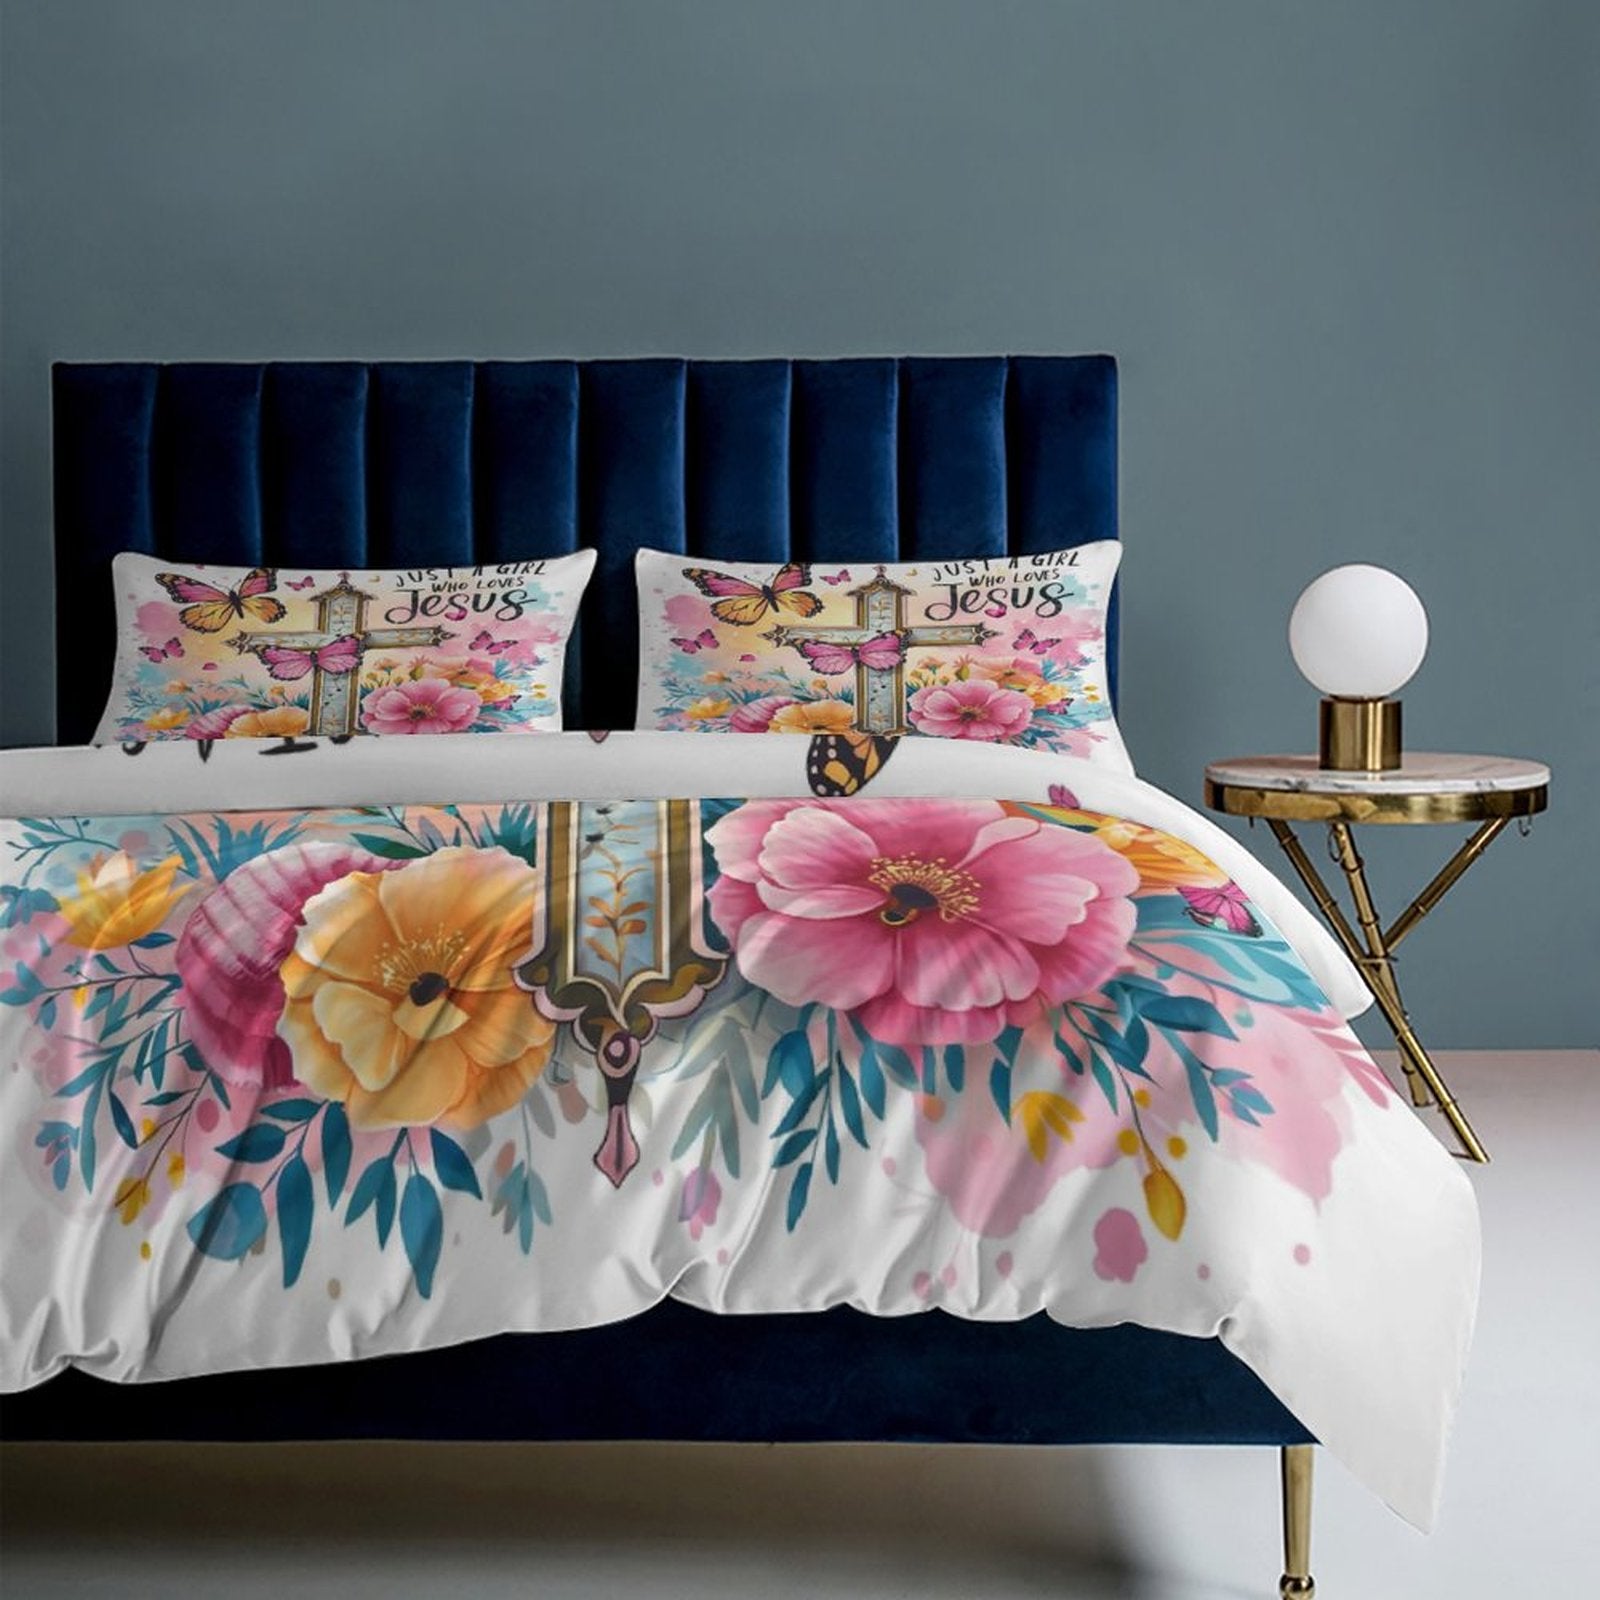 Just A Girl Who Loves Jesus 3-Piece Christian Comforter Bedding Set-86"×70"/ 218×177cm SALE-Personal Design